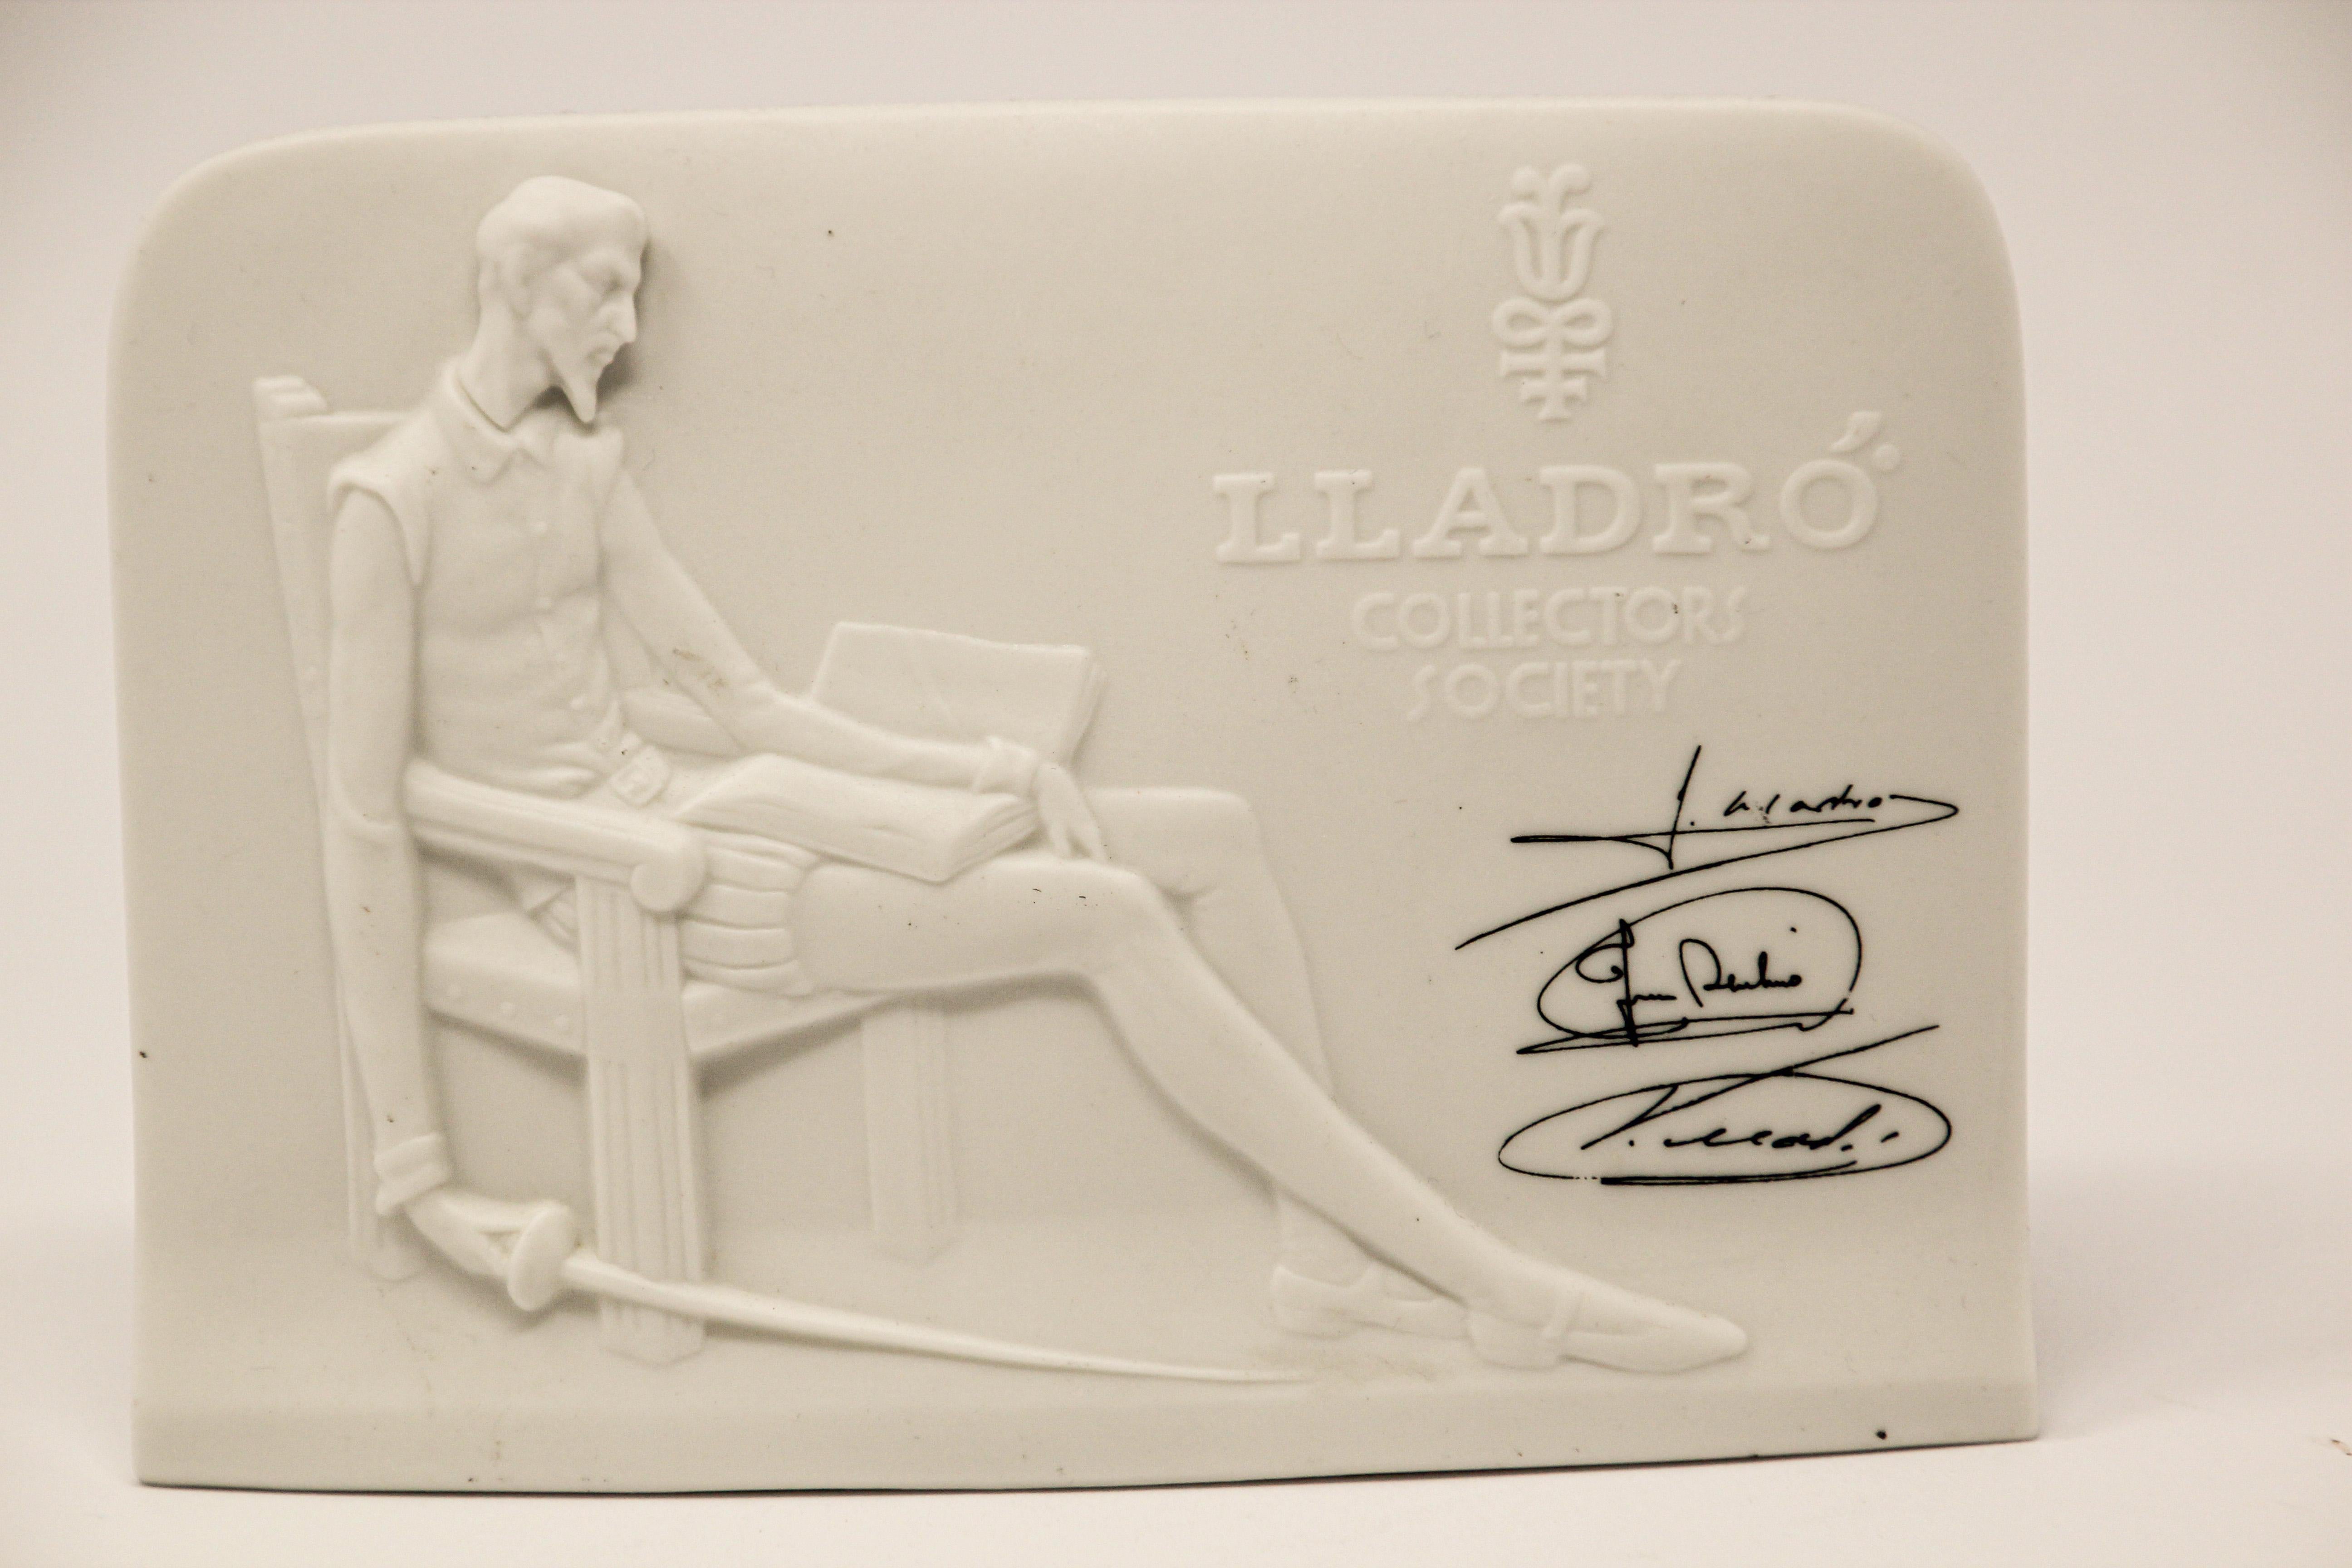 lladro collectors society signed plaque